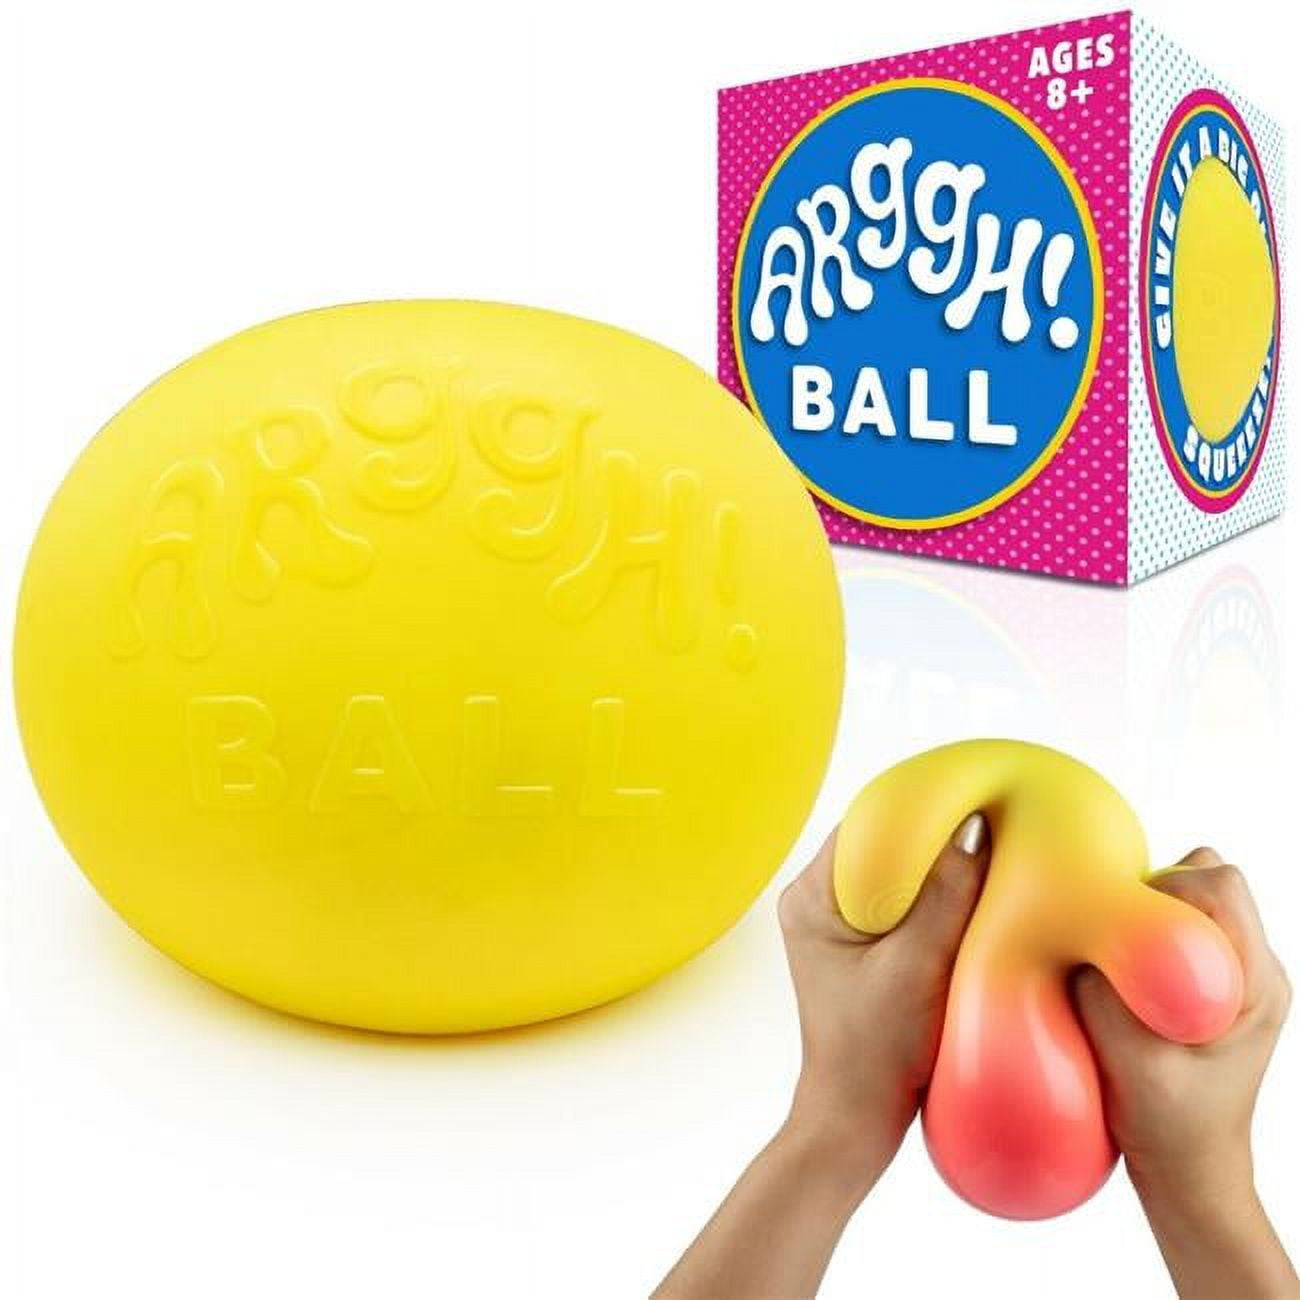 Crayola Globbles Faces Squeeze Balls 3pk Assorted